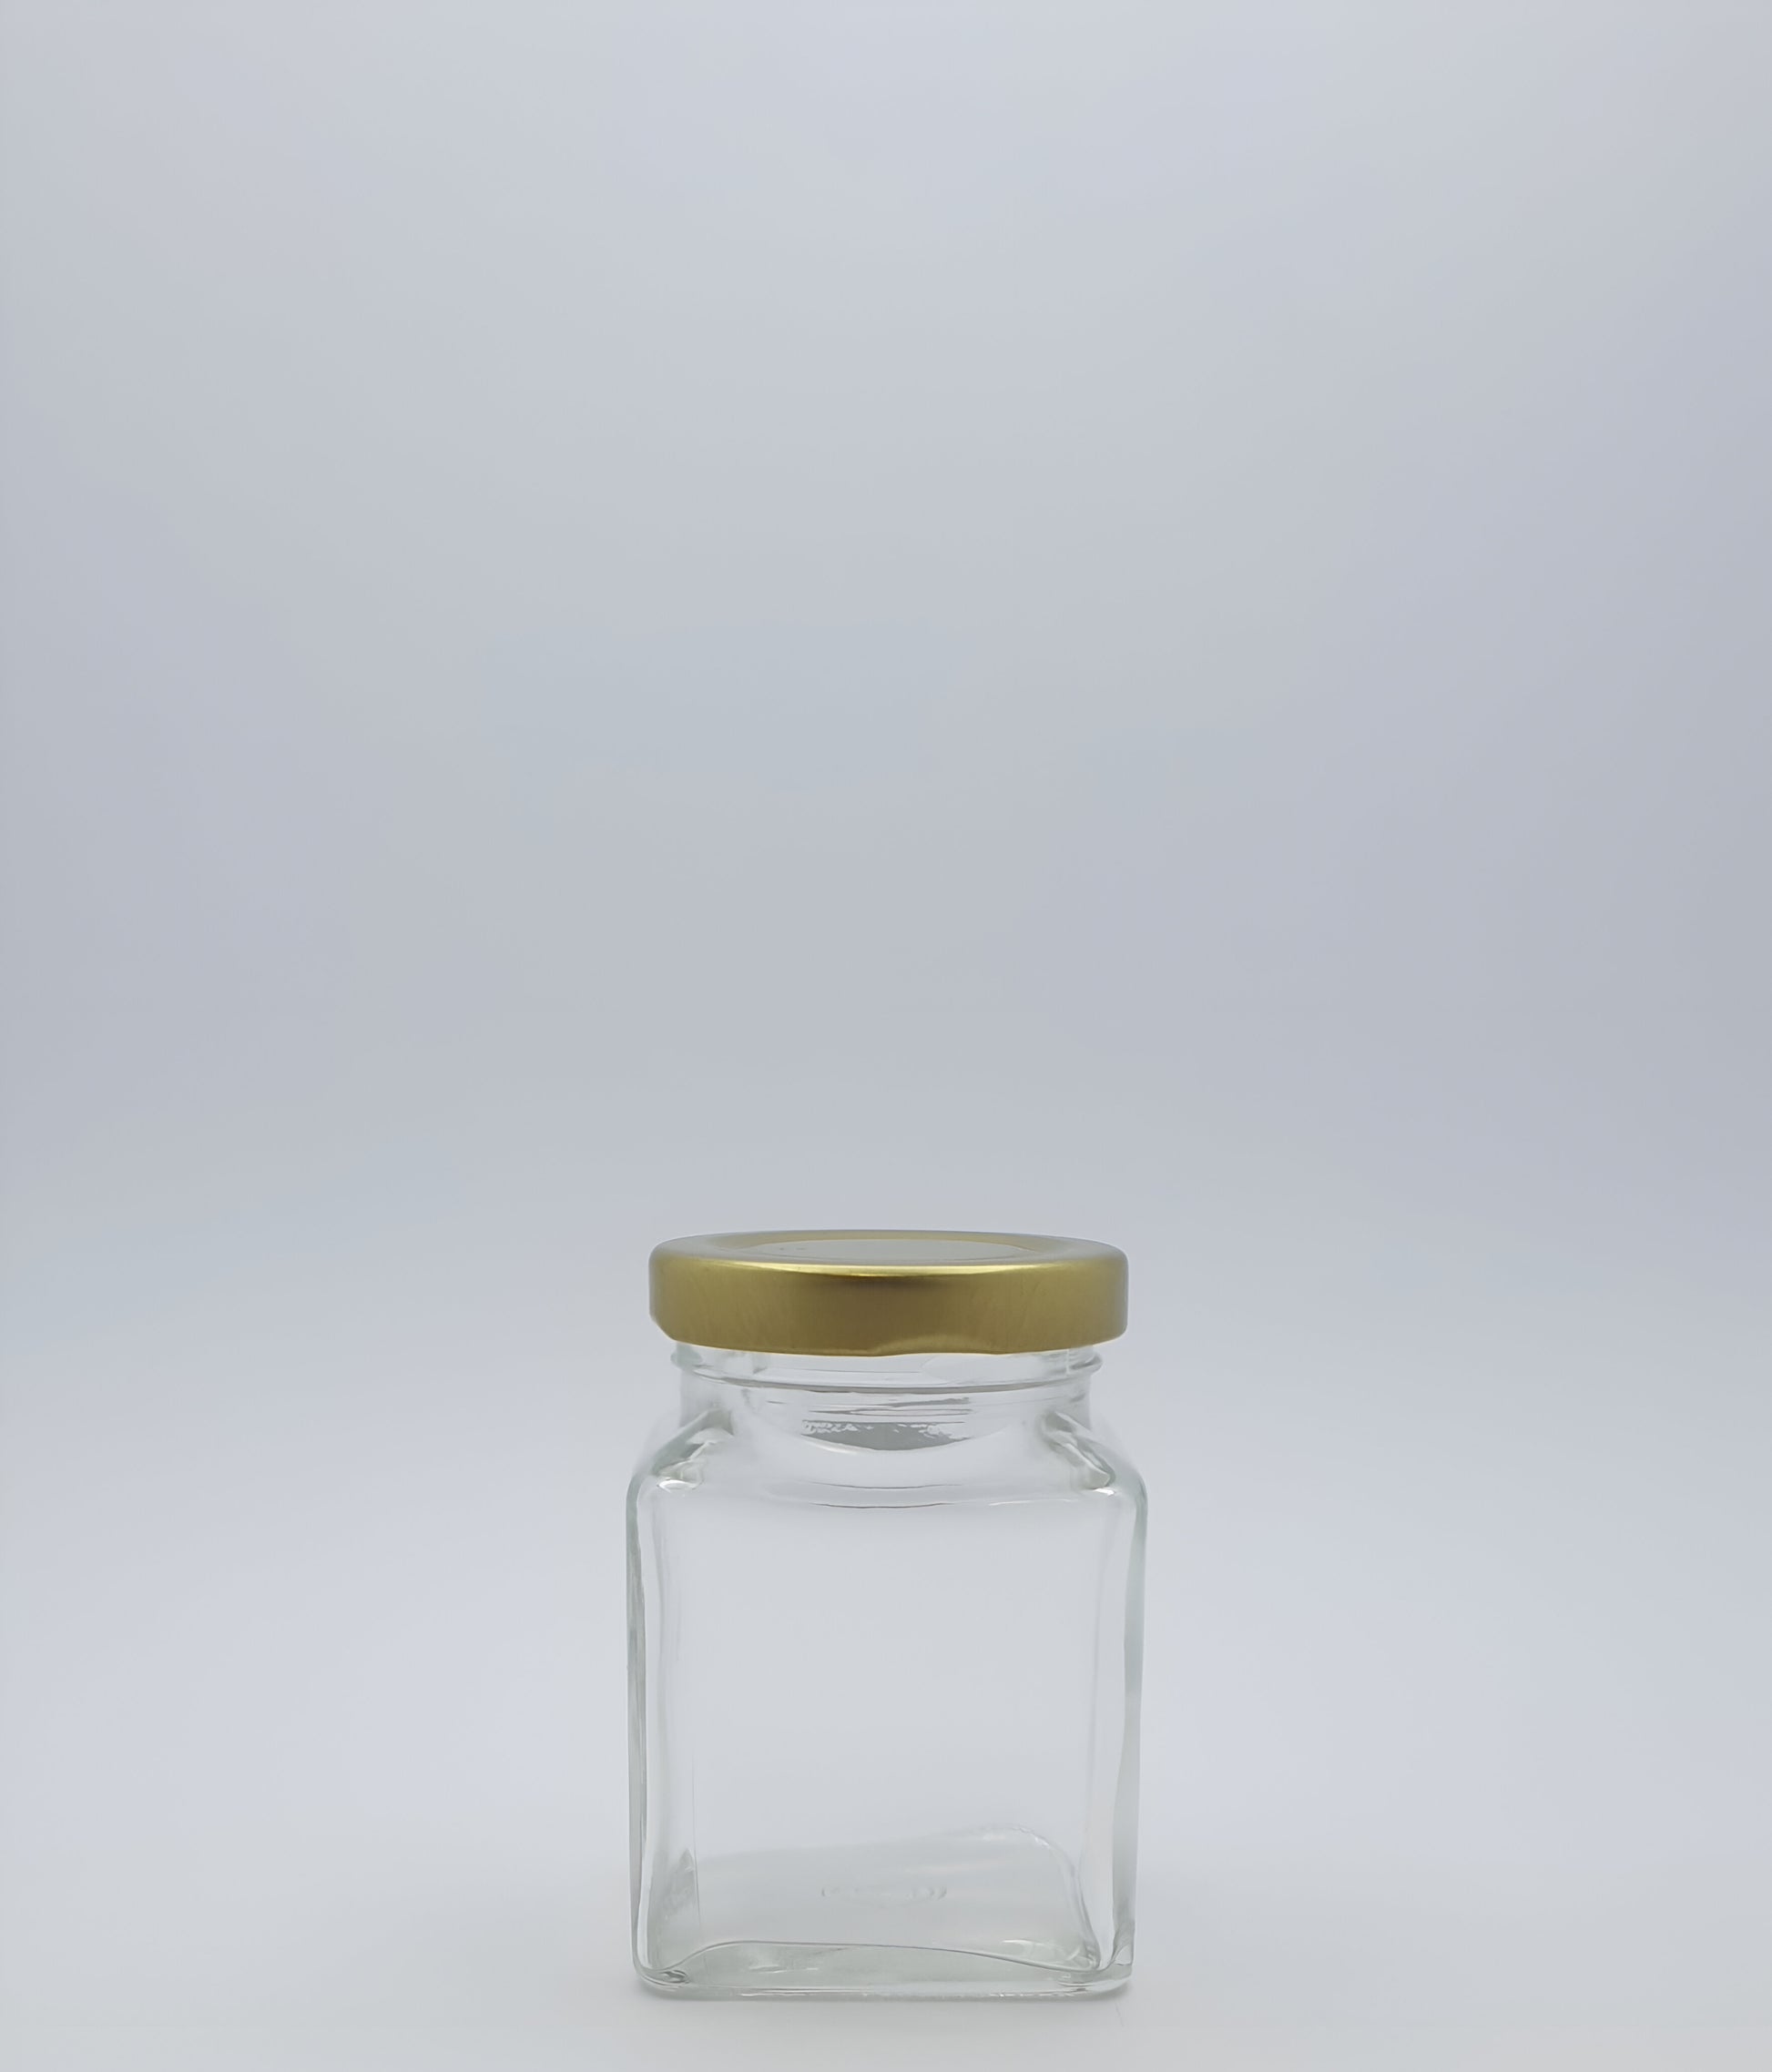 110ml(150gm) Square Glass Jar with a 48mm gold Metal Twist Cap